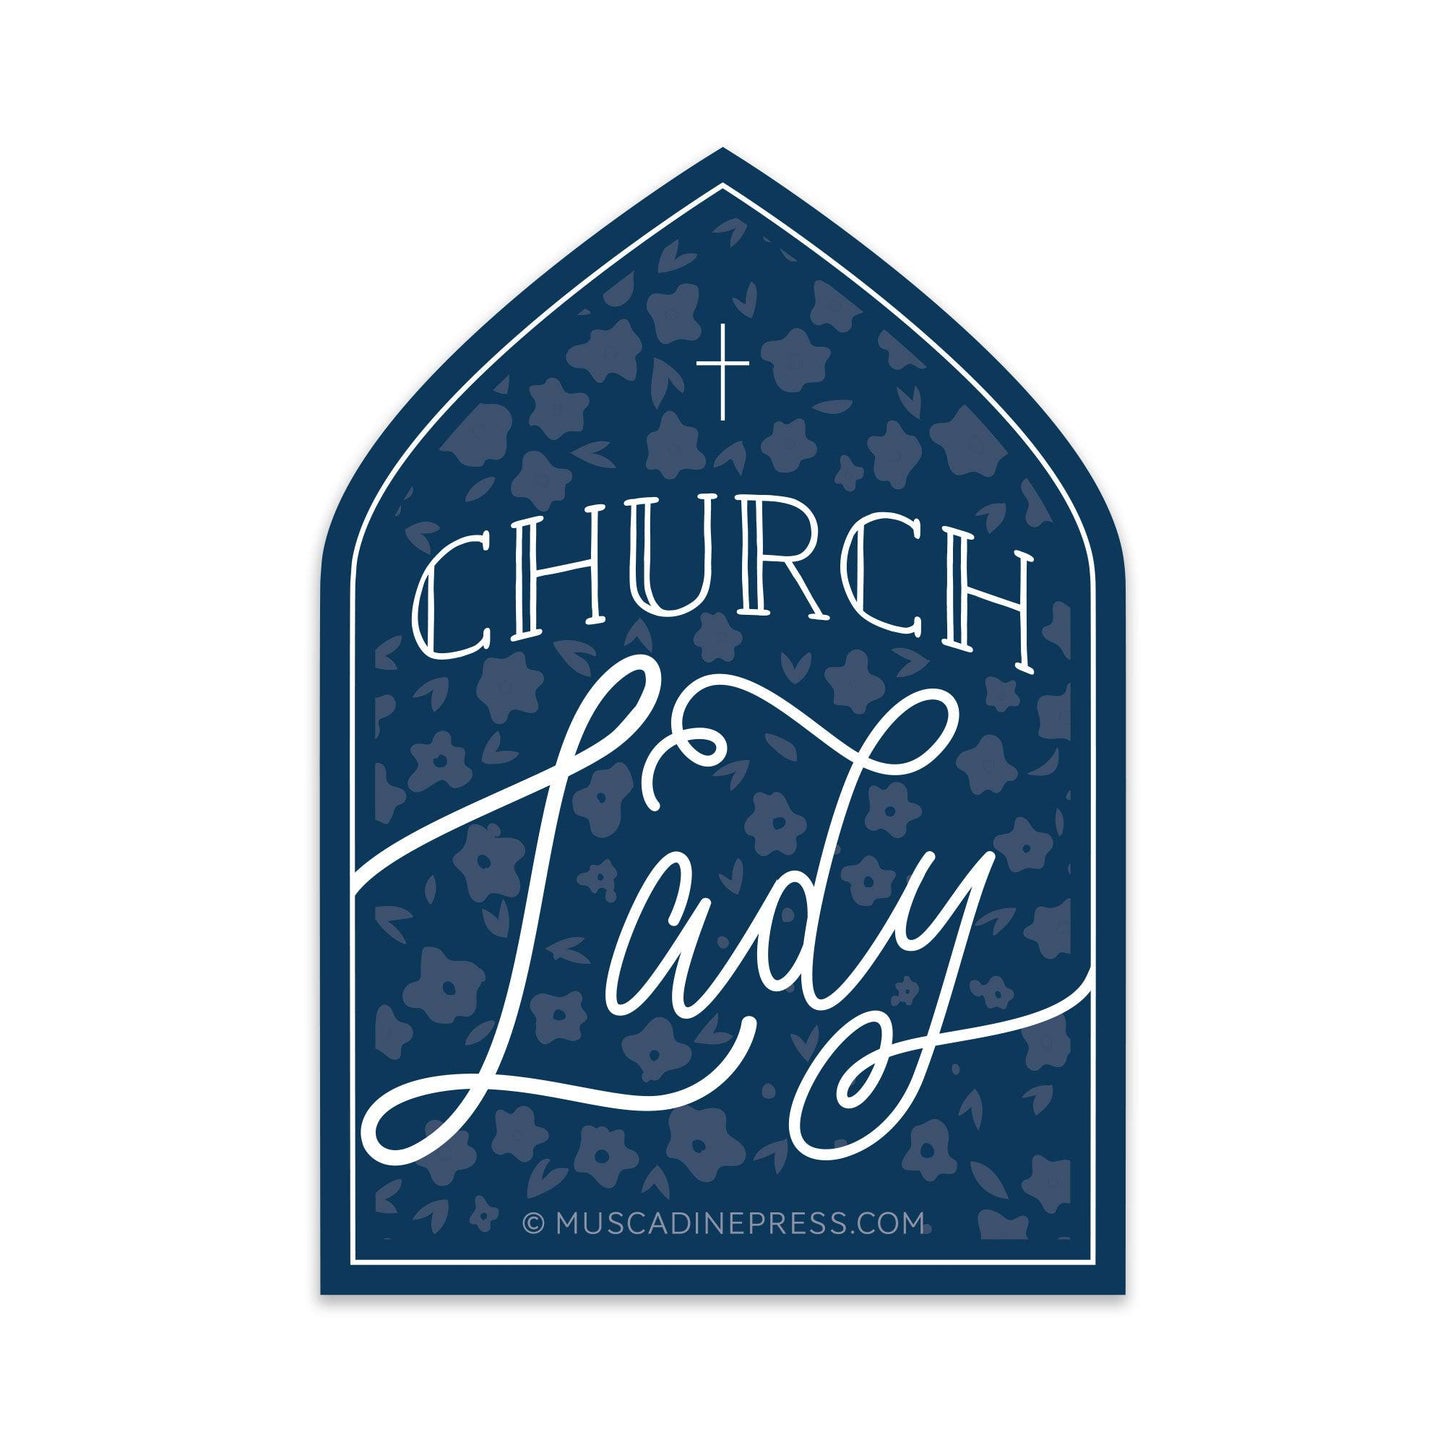 Inspirational Christian Sticker, Church Lady